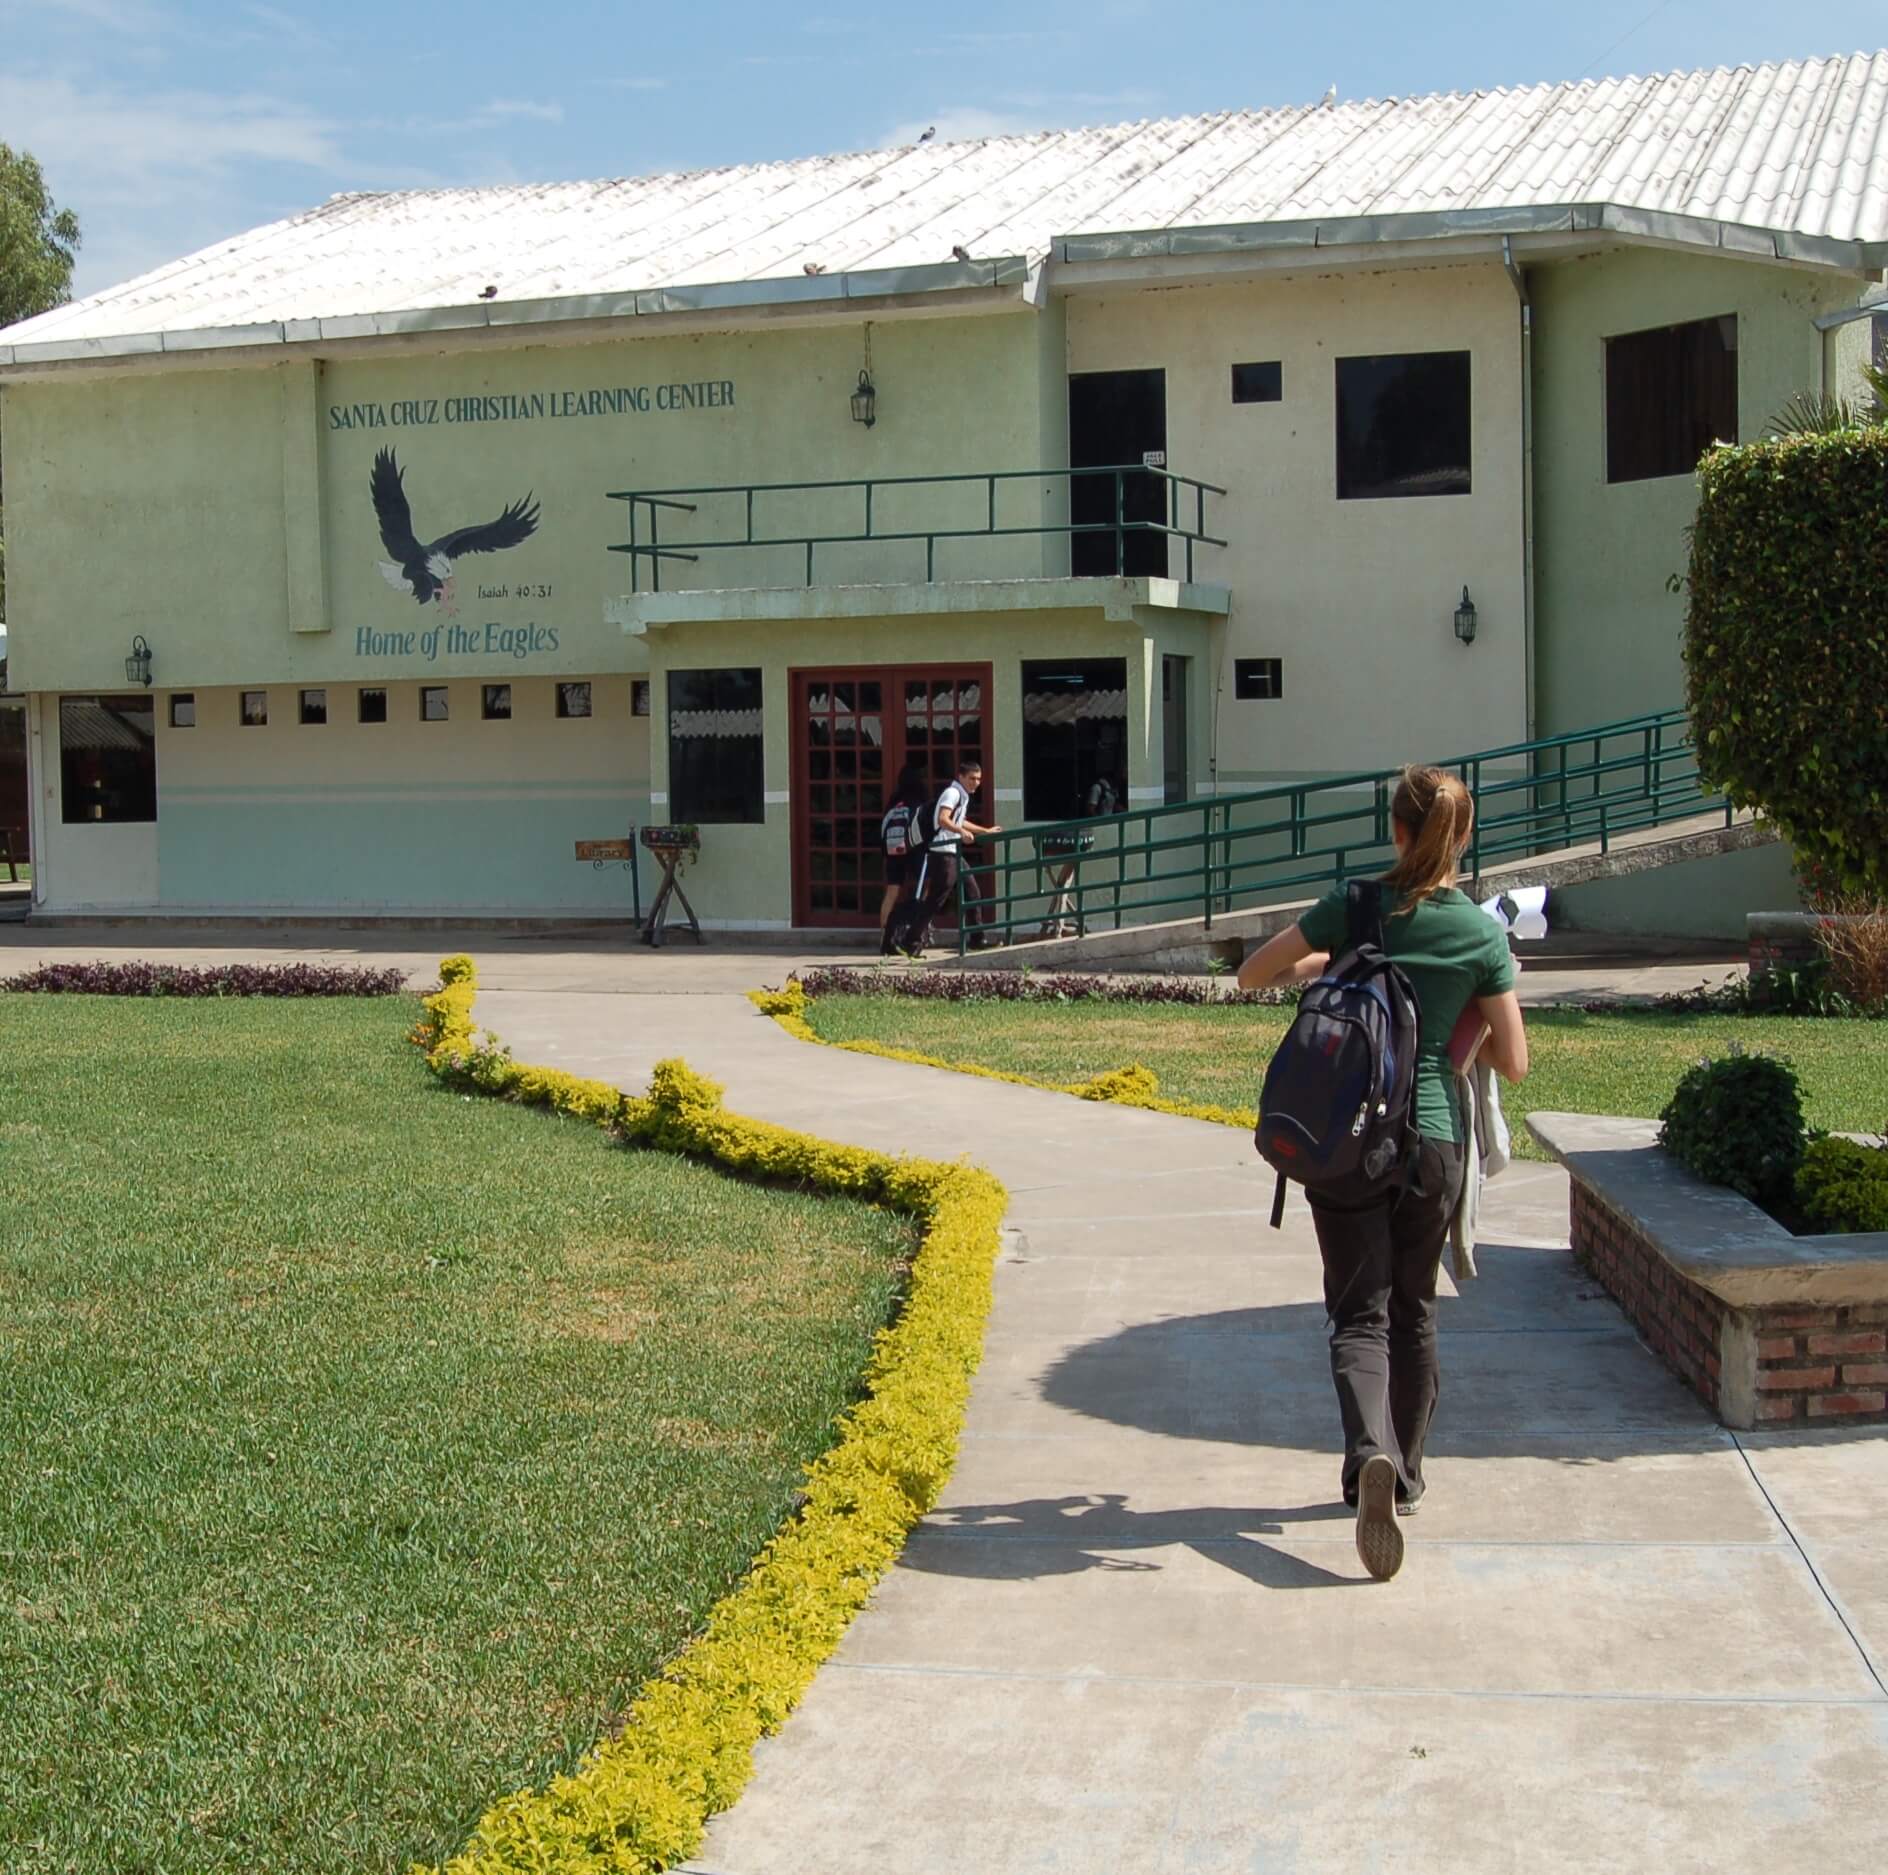 SCCLC, Santa Cruz Christian Learning Center, Bolivia